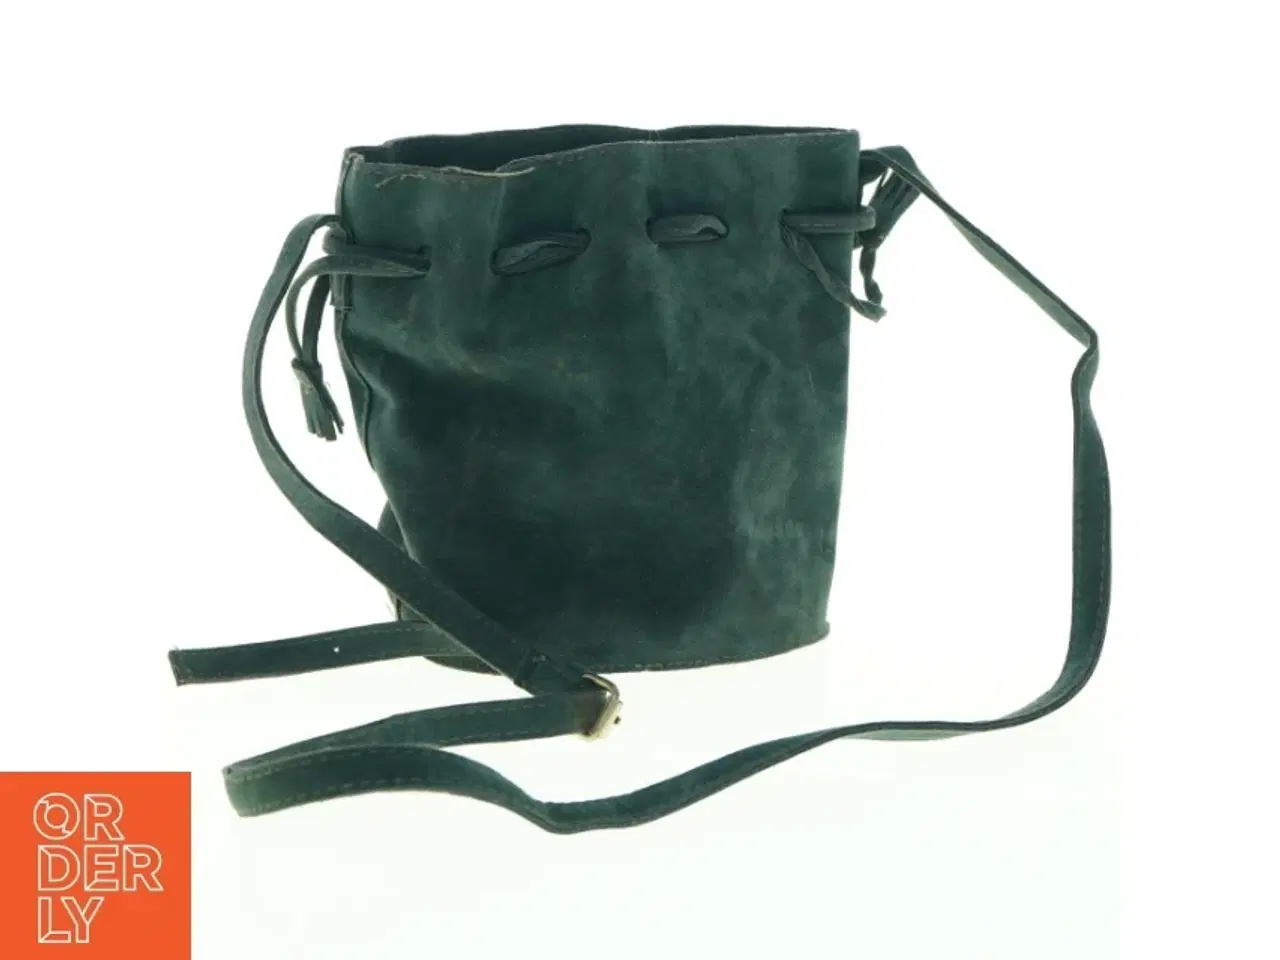 Billede 1 - Grøn lædertaske fra Lanweier (str. 21 x 20 cm)